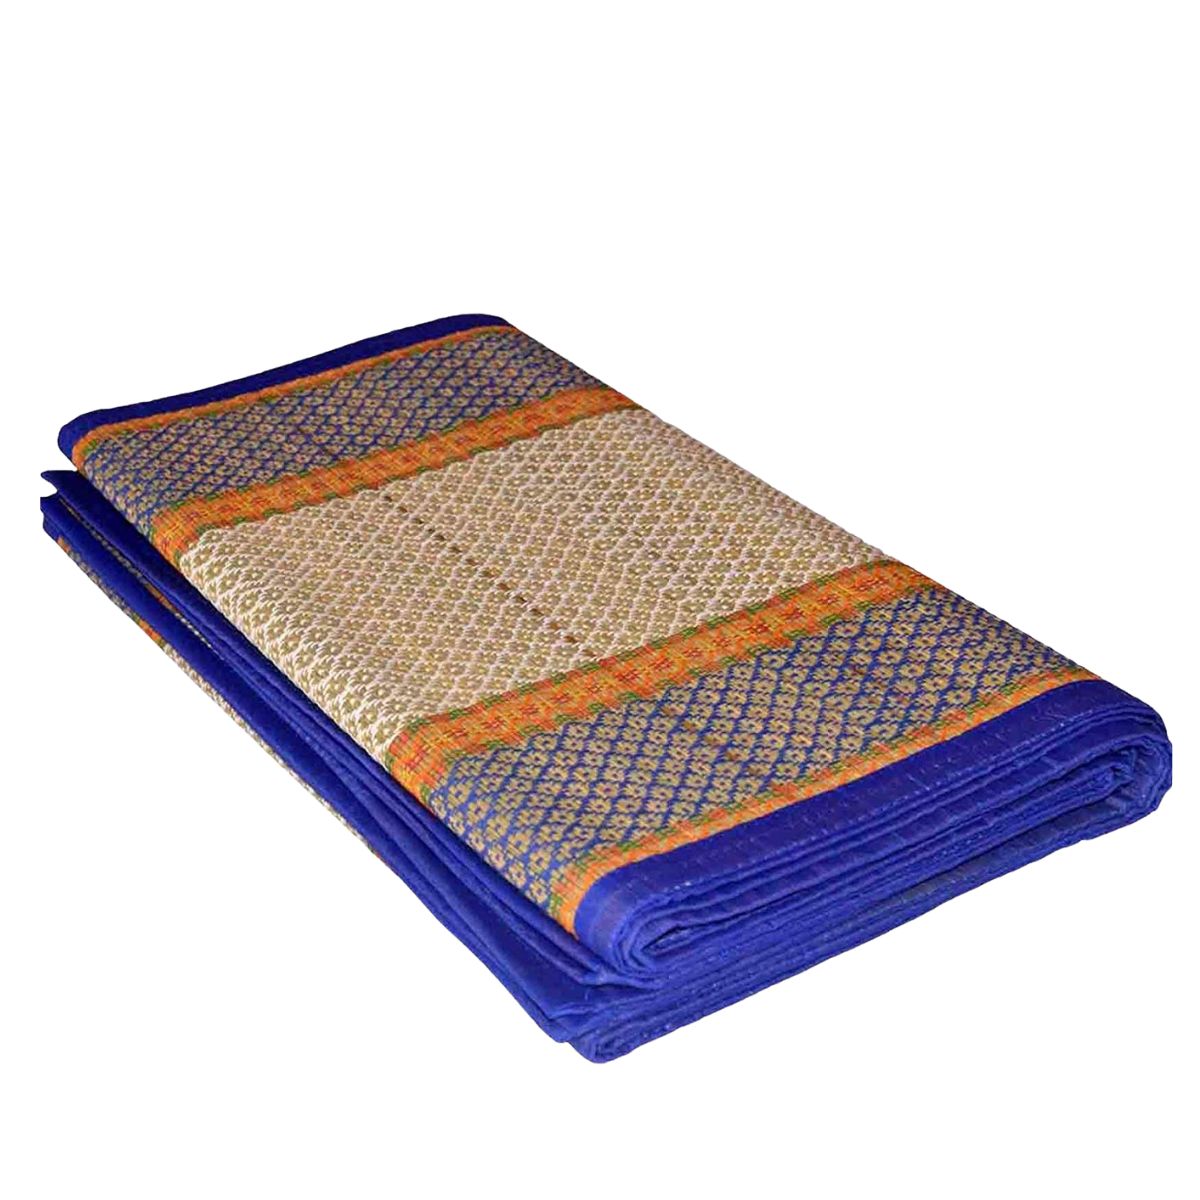 Designer Organic Chatai Mat Foldable made of Madurkathi Grass for Sleeping, Sitting on Floor - T3-31